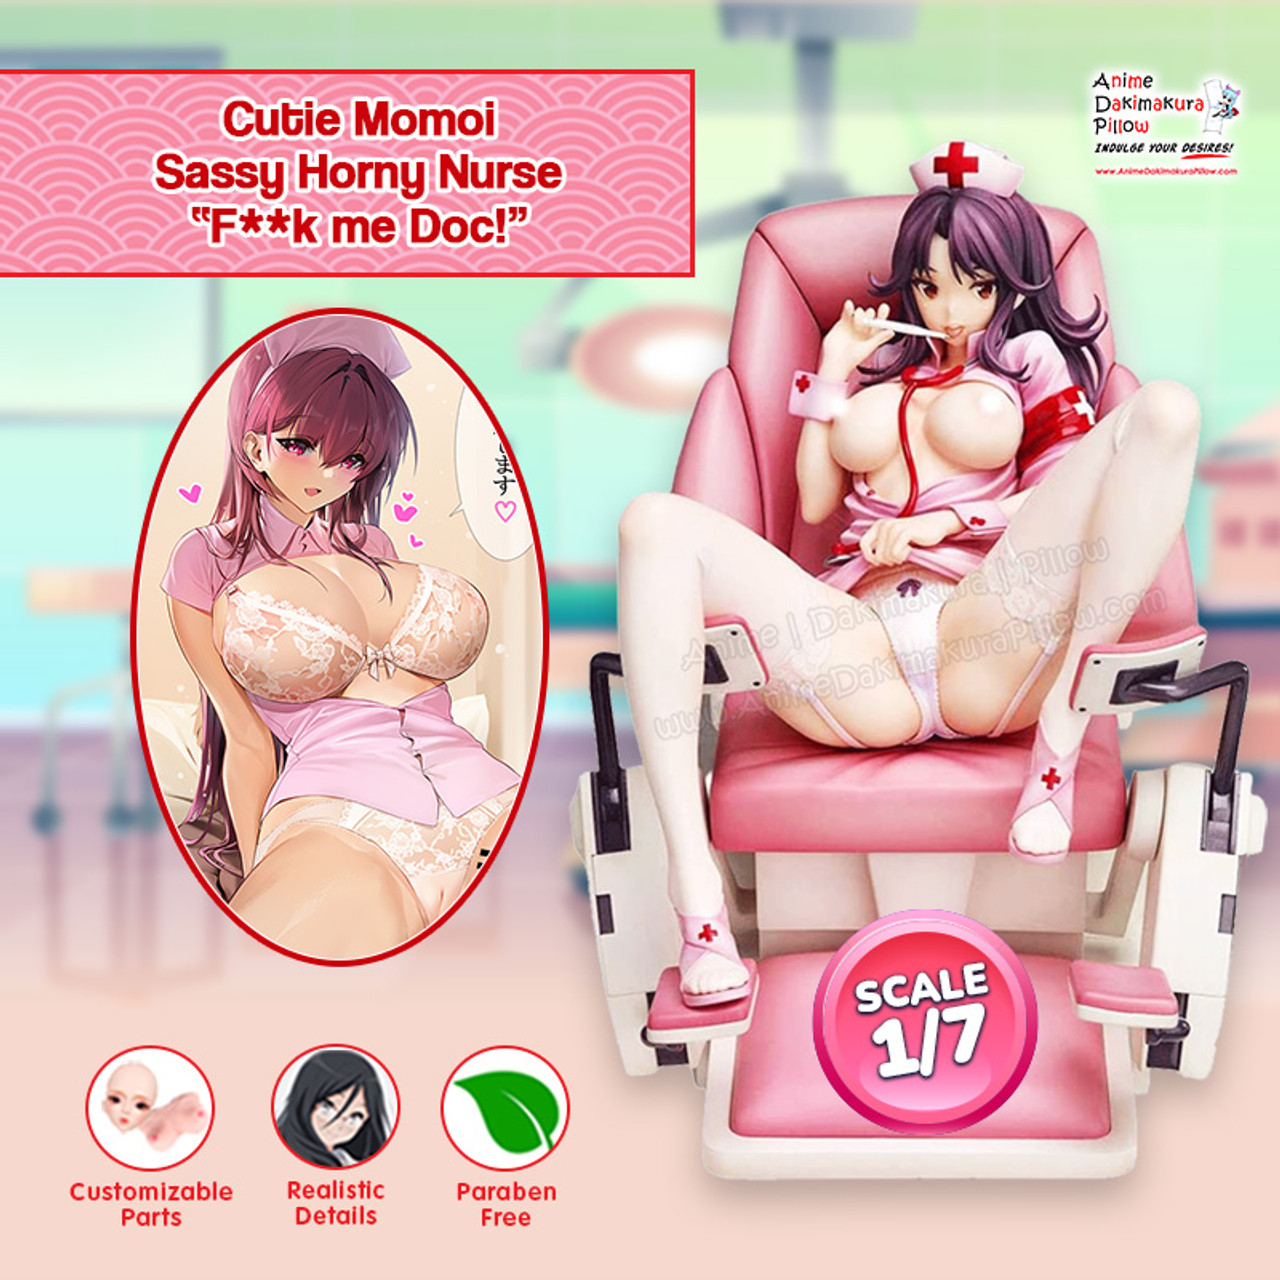 ADP Cutie Momoi Sassy Horny Nurse “Fuck me Doc!” 18+ Anime Figurine OH-FG-024 image